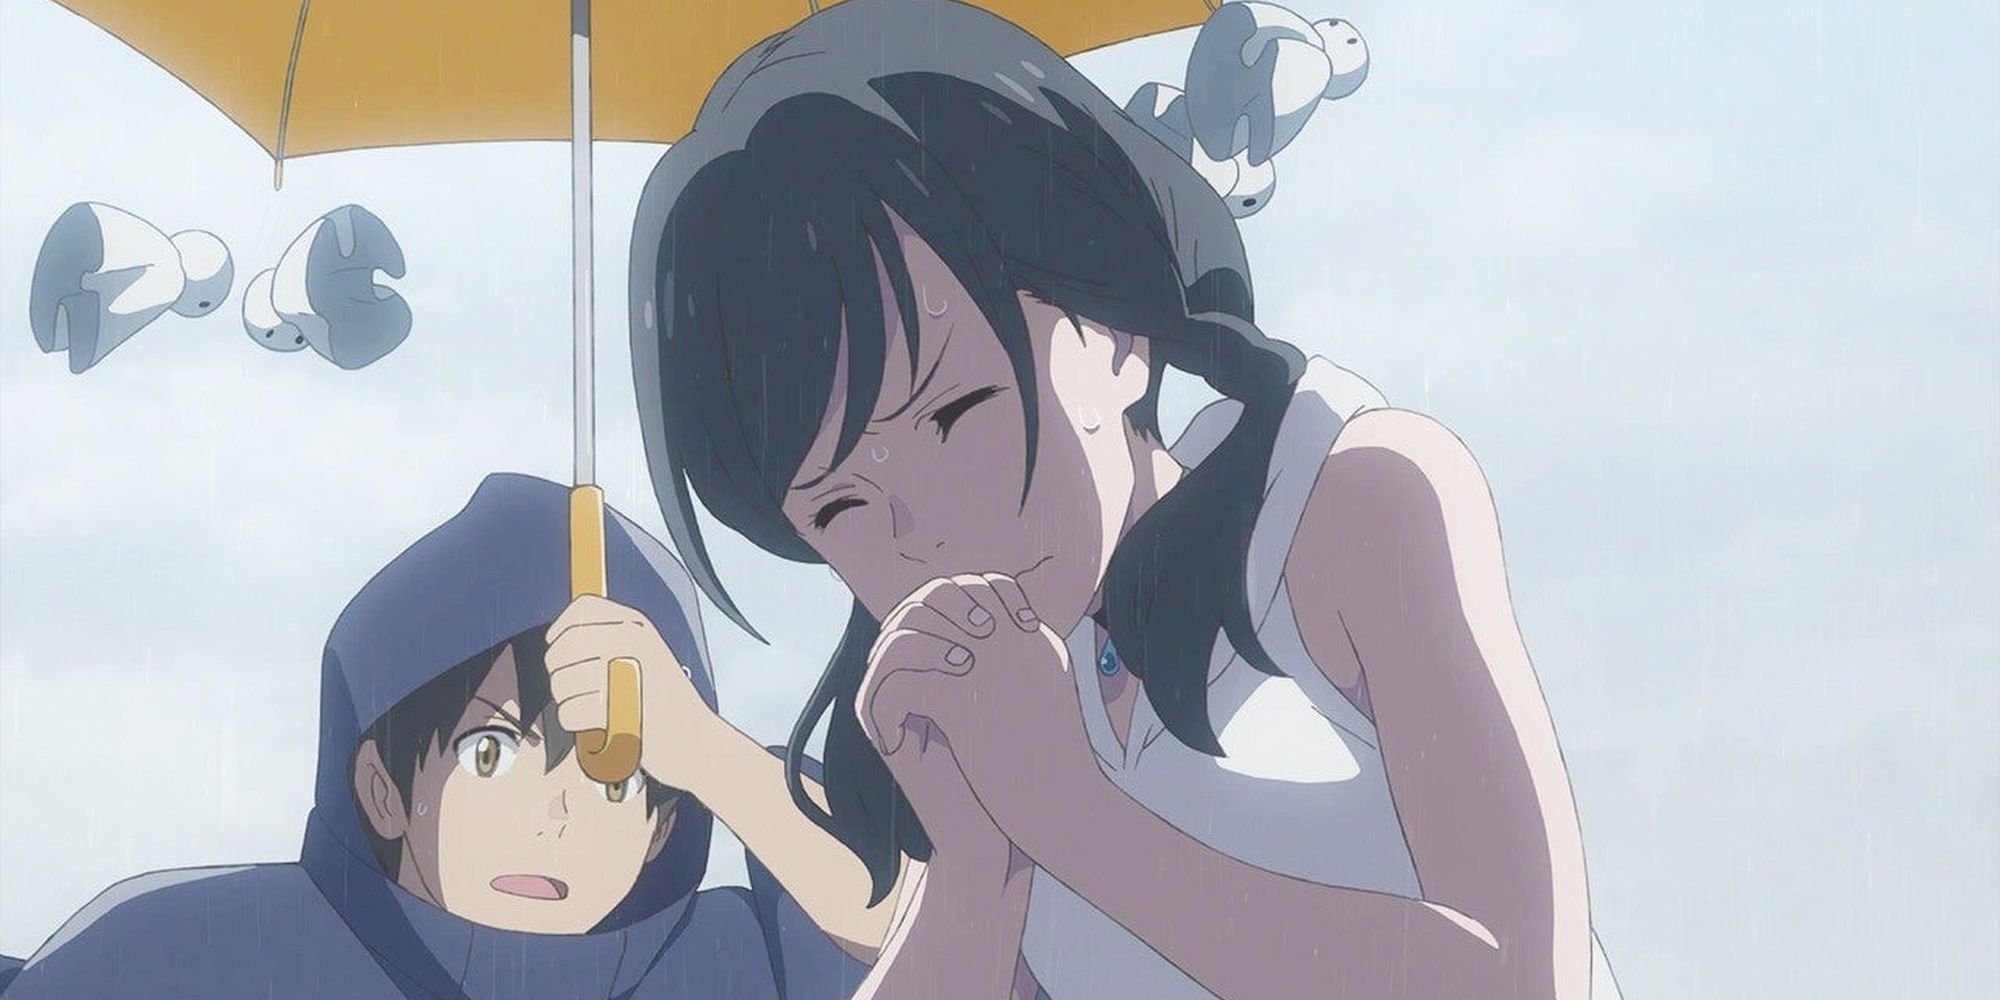 Hina praying while Hodaka holds an umbrella over her.